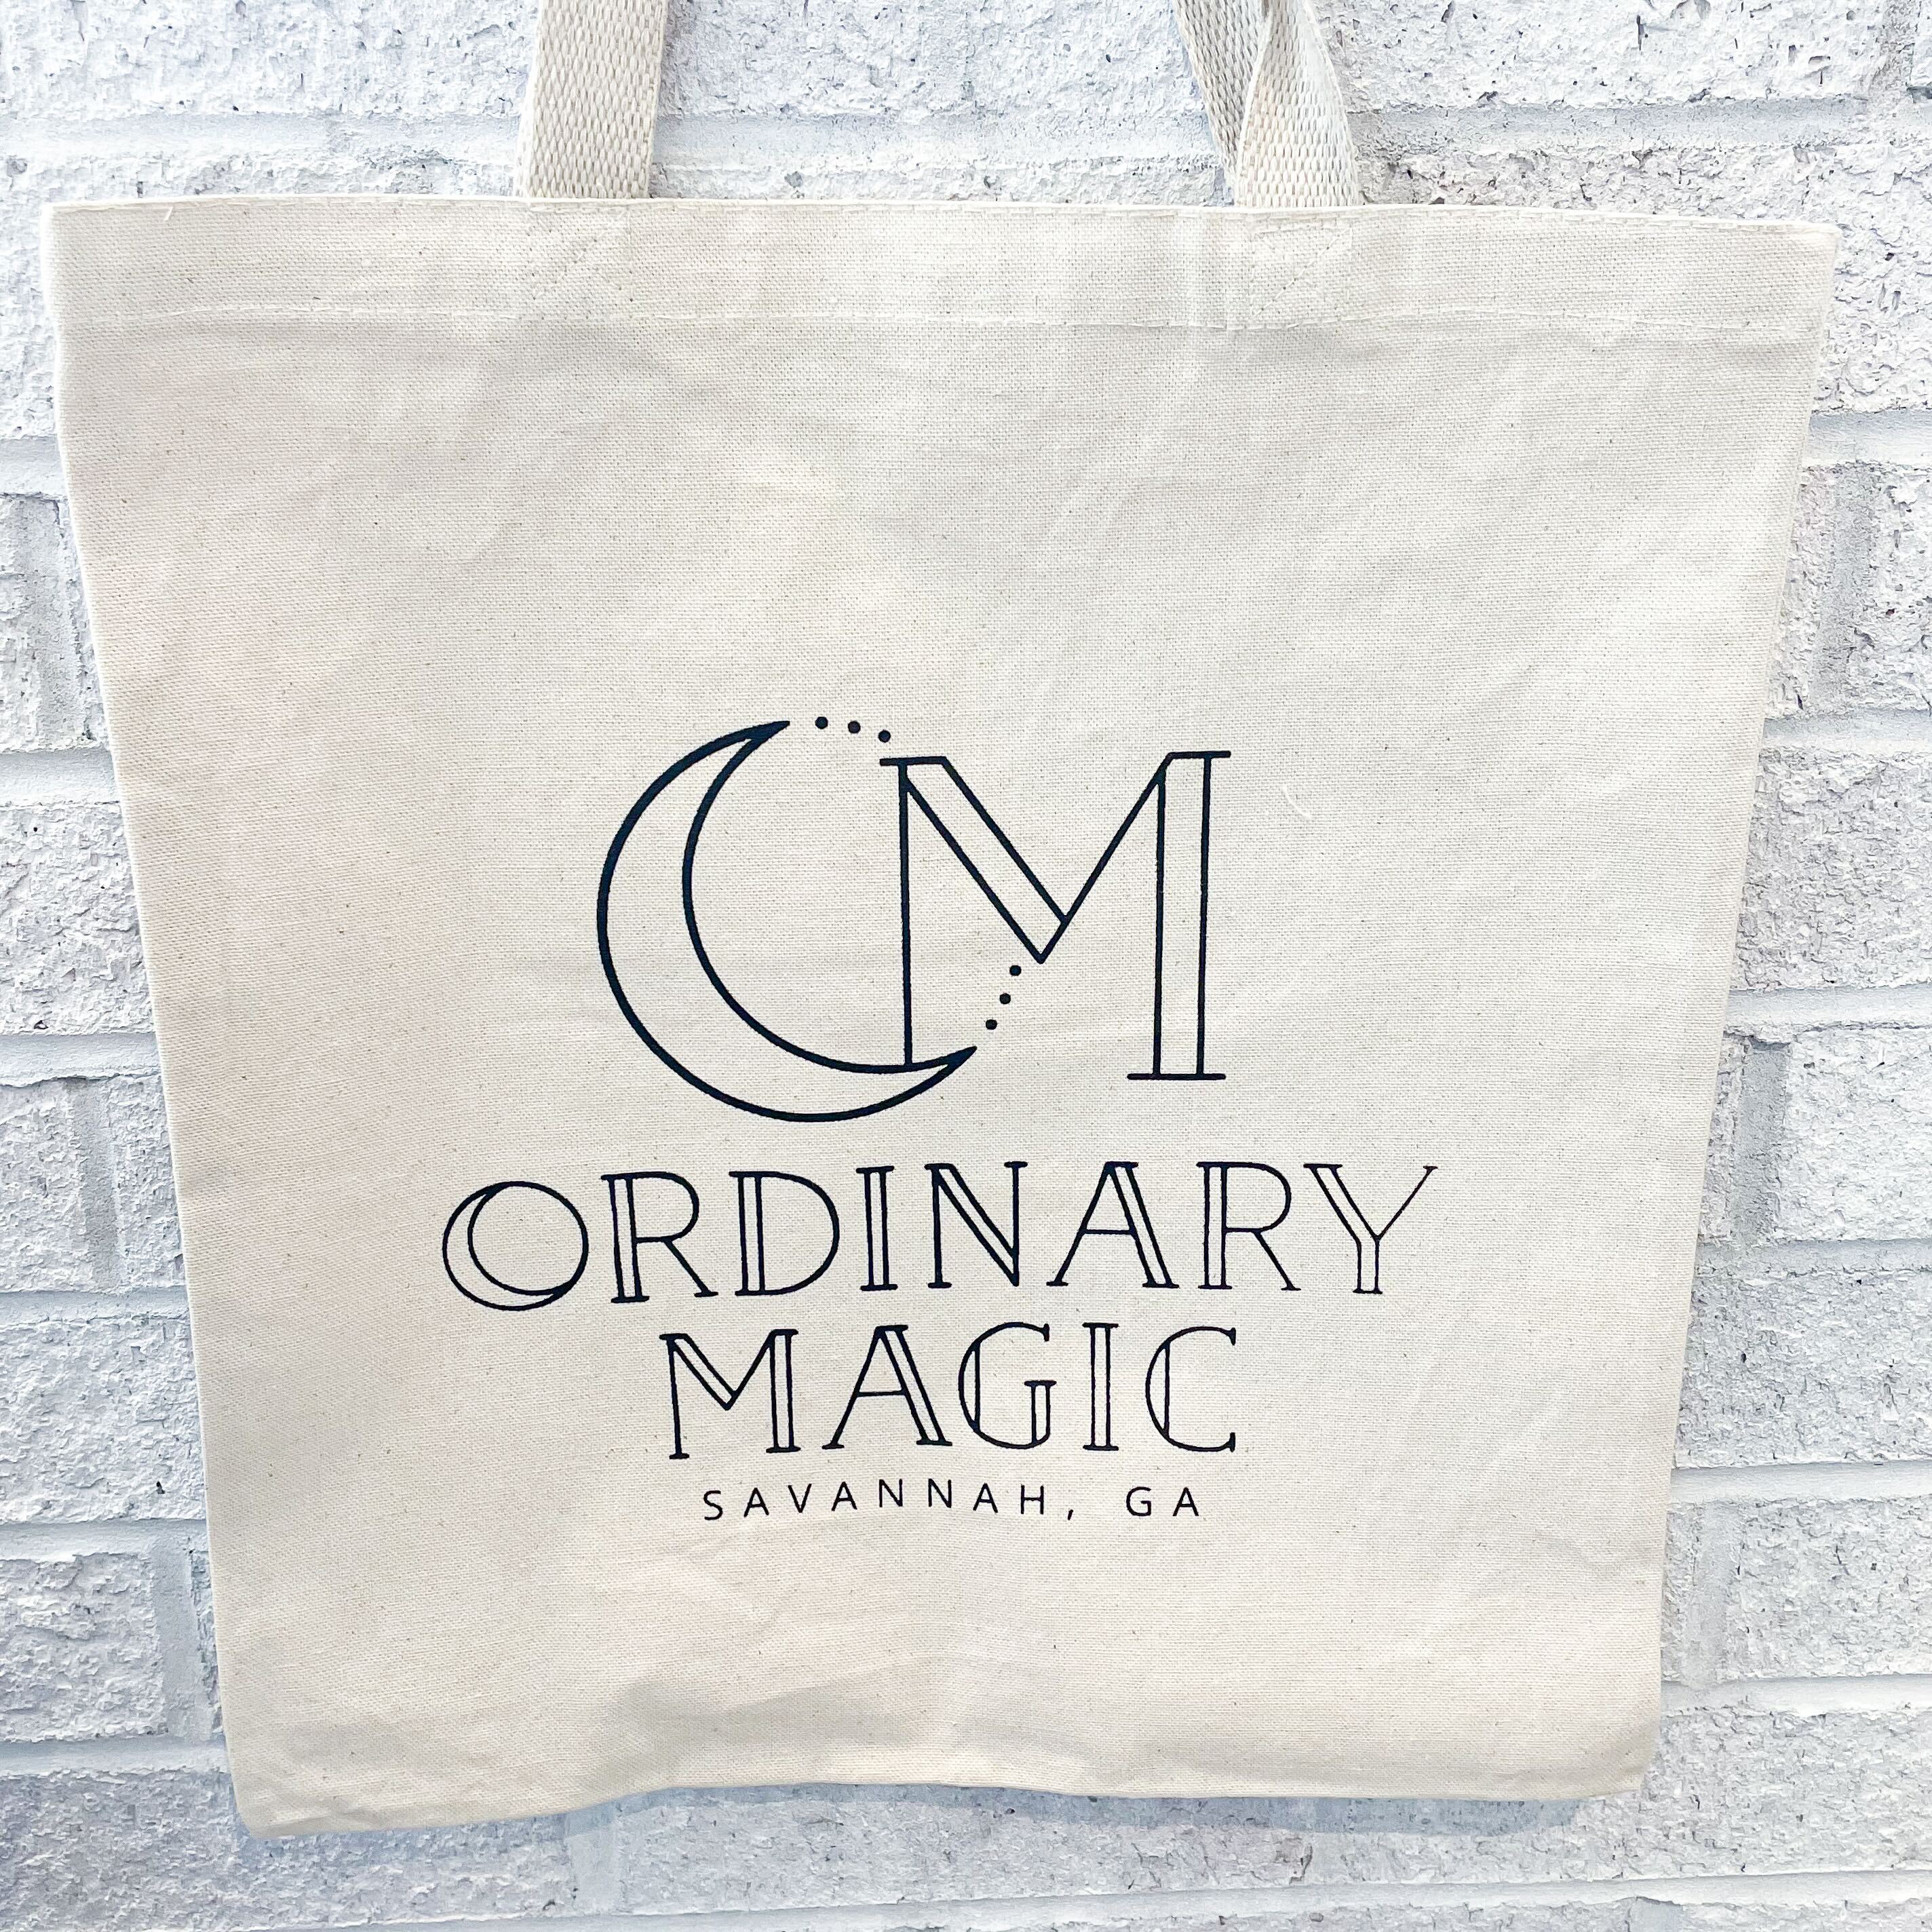 Ordinary Magic Canvas Tote Bag